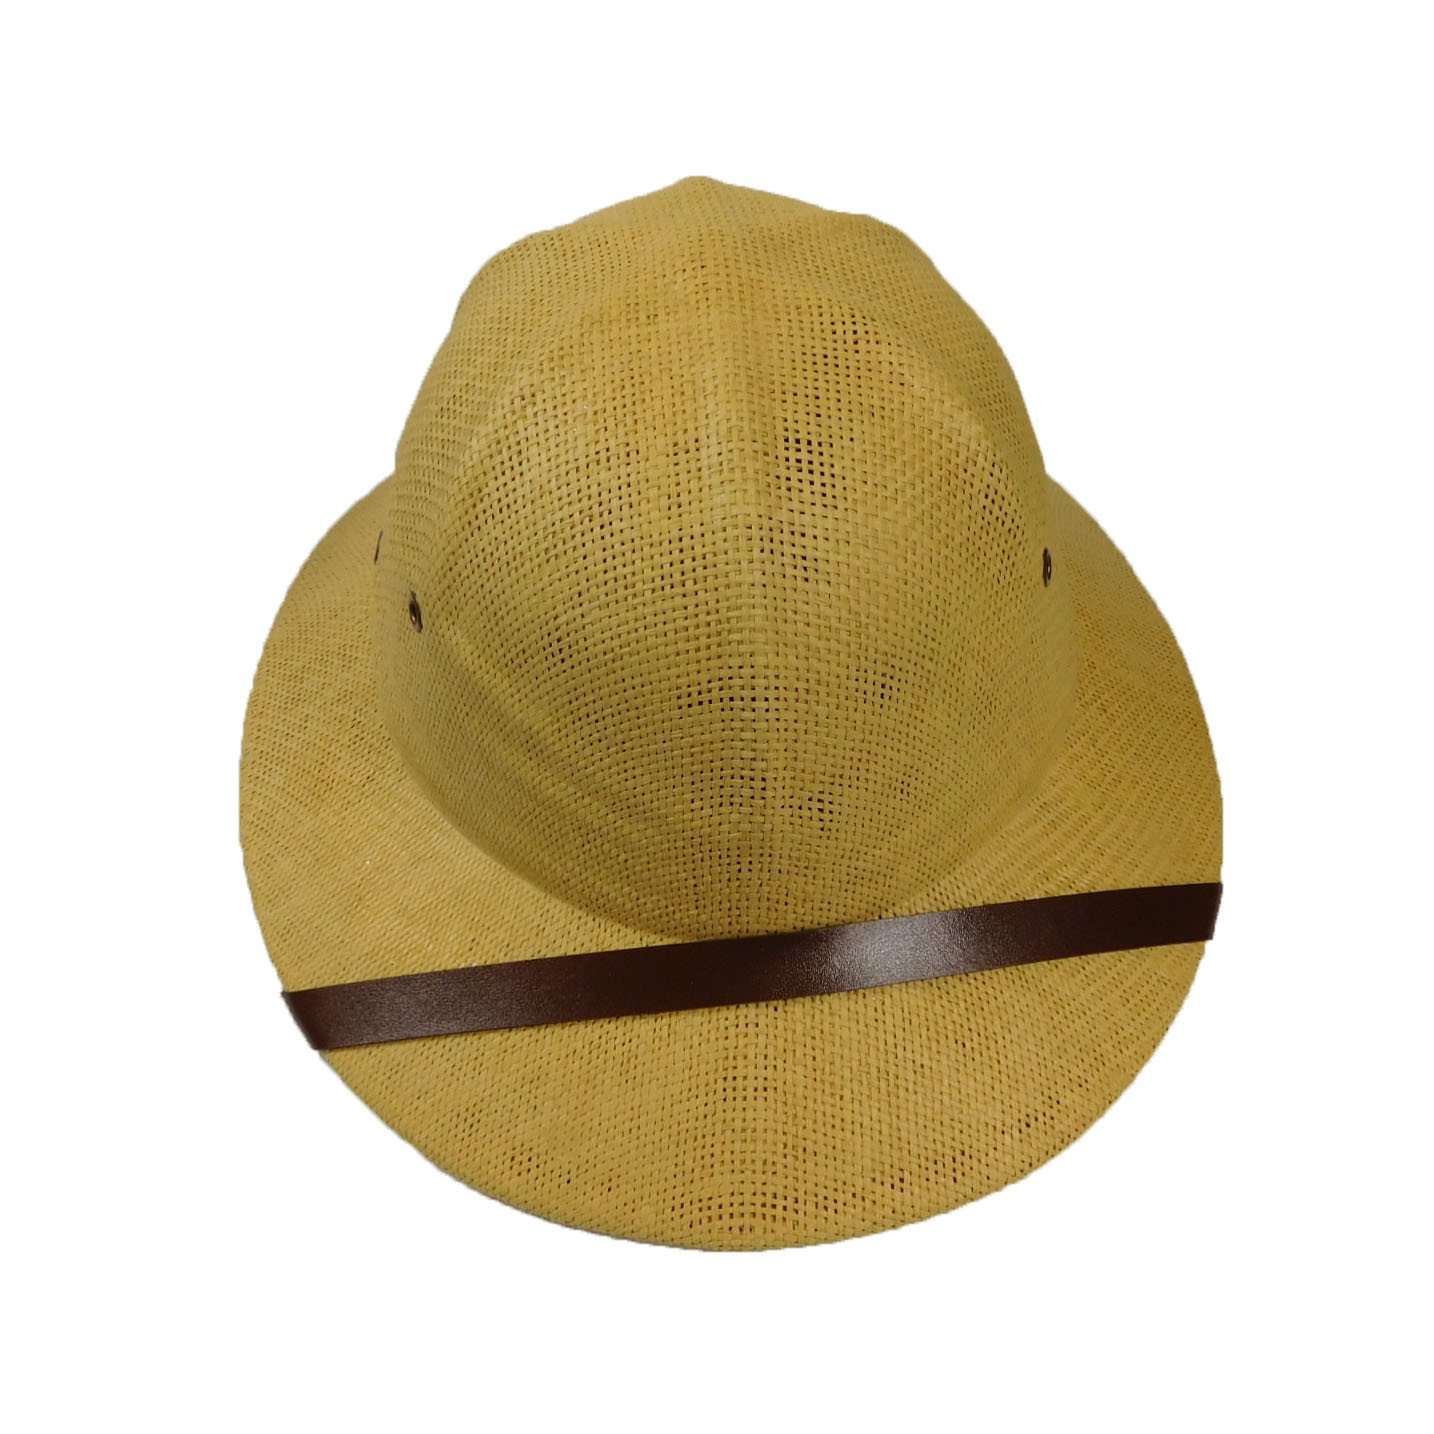 Safari Pith Helmet - Milani Hats Safari Hat Milani Hats    